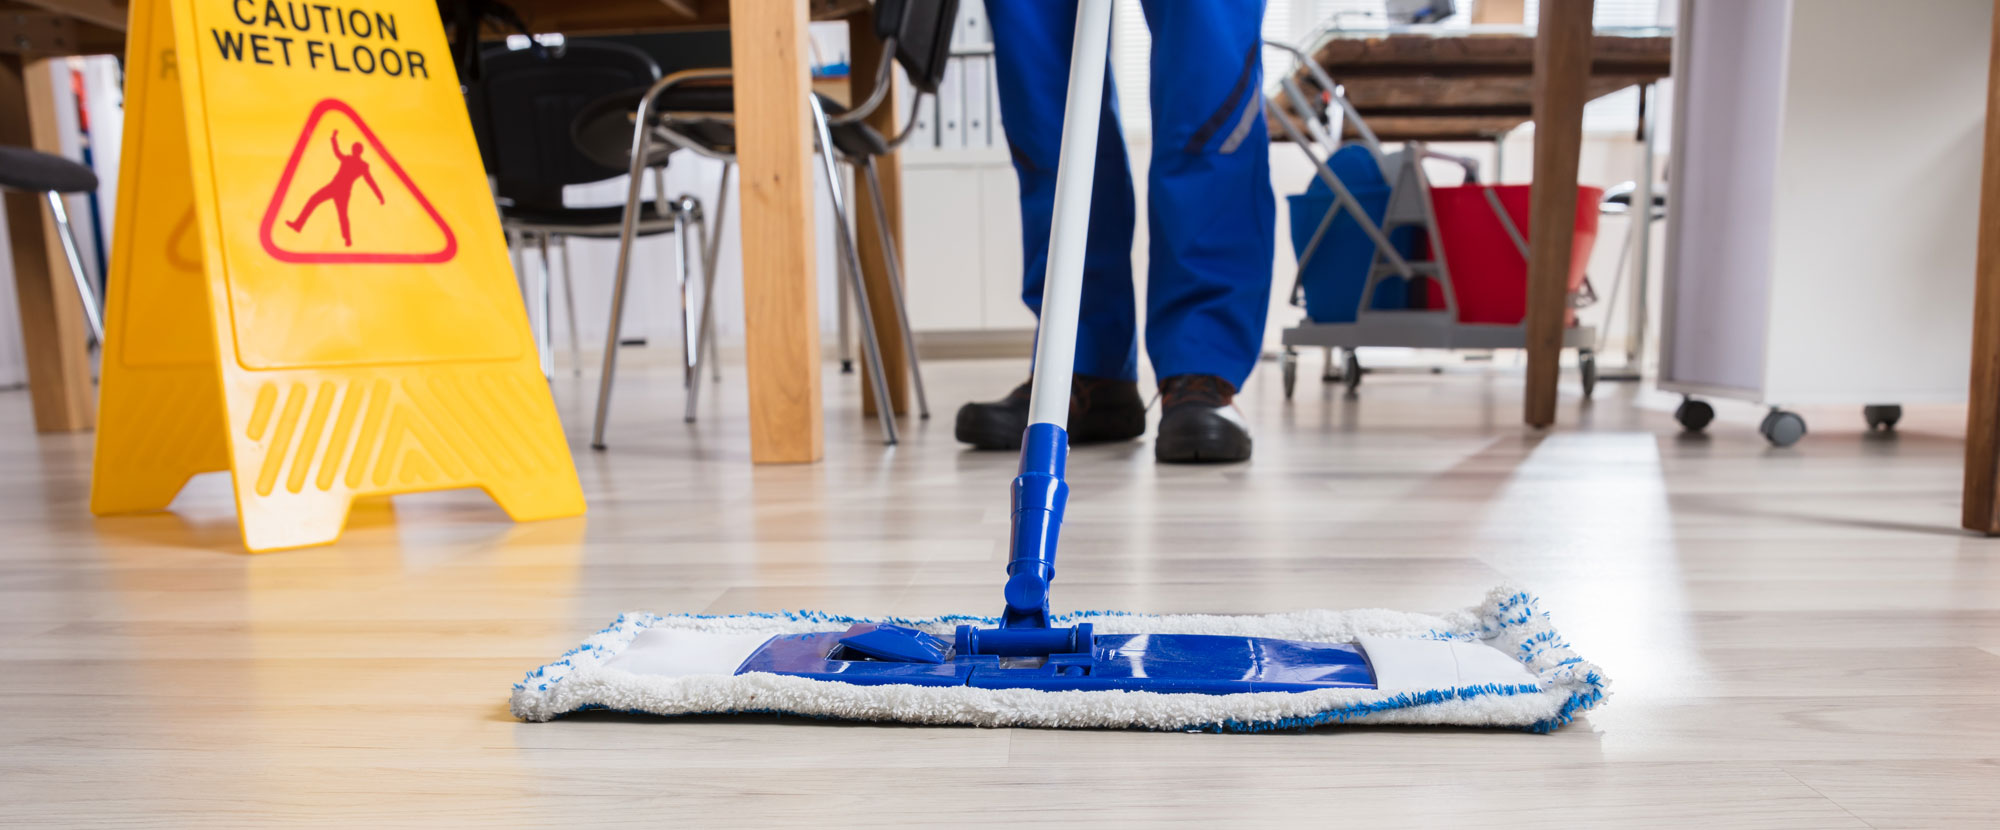 Keep wet floors as they. Грин клининг. Caution wet Floor швабра. Wet Floor. Seasonal clean-ups.